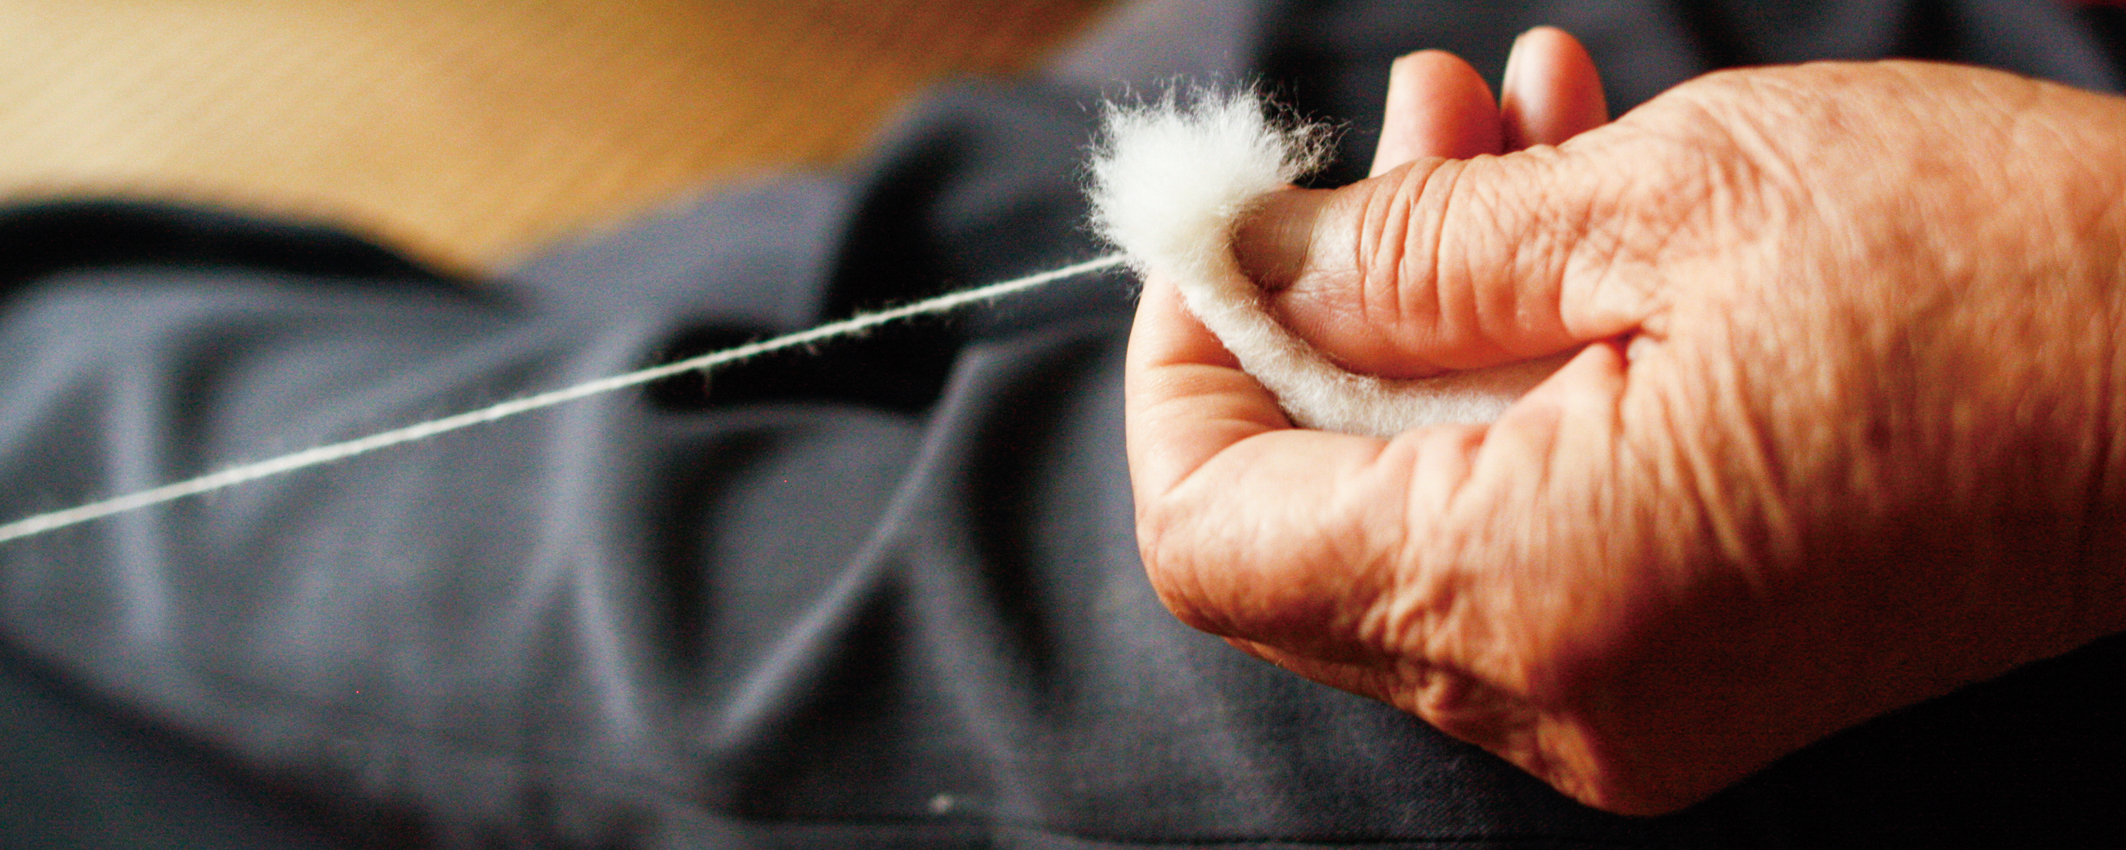 5/2 Weaving Cotton - One Pound Cone, Organic or Dye-lishus – HipStrings